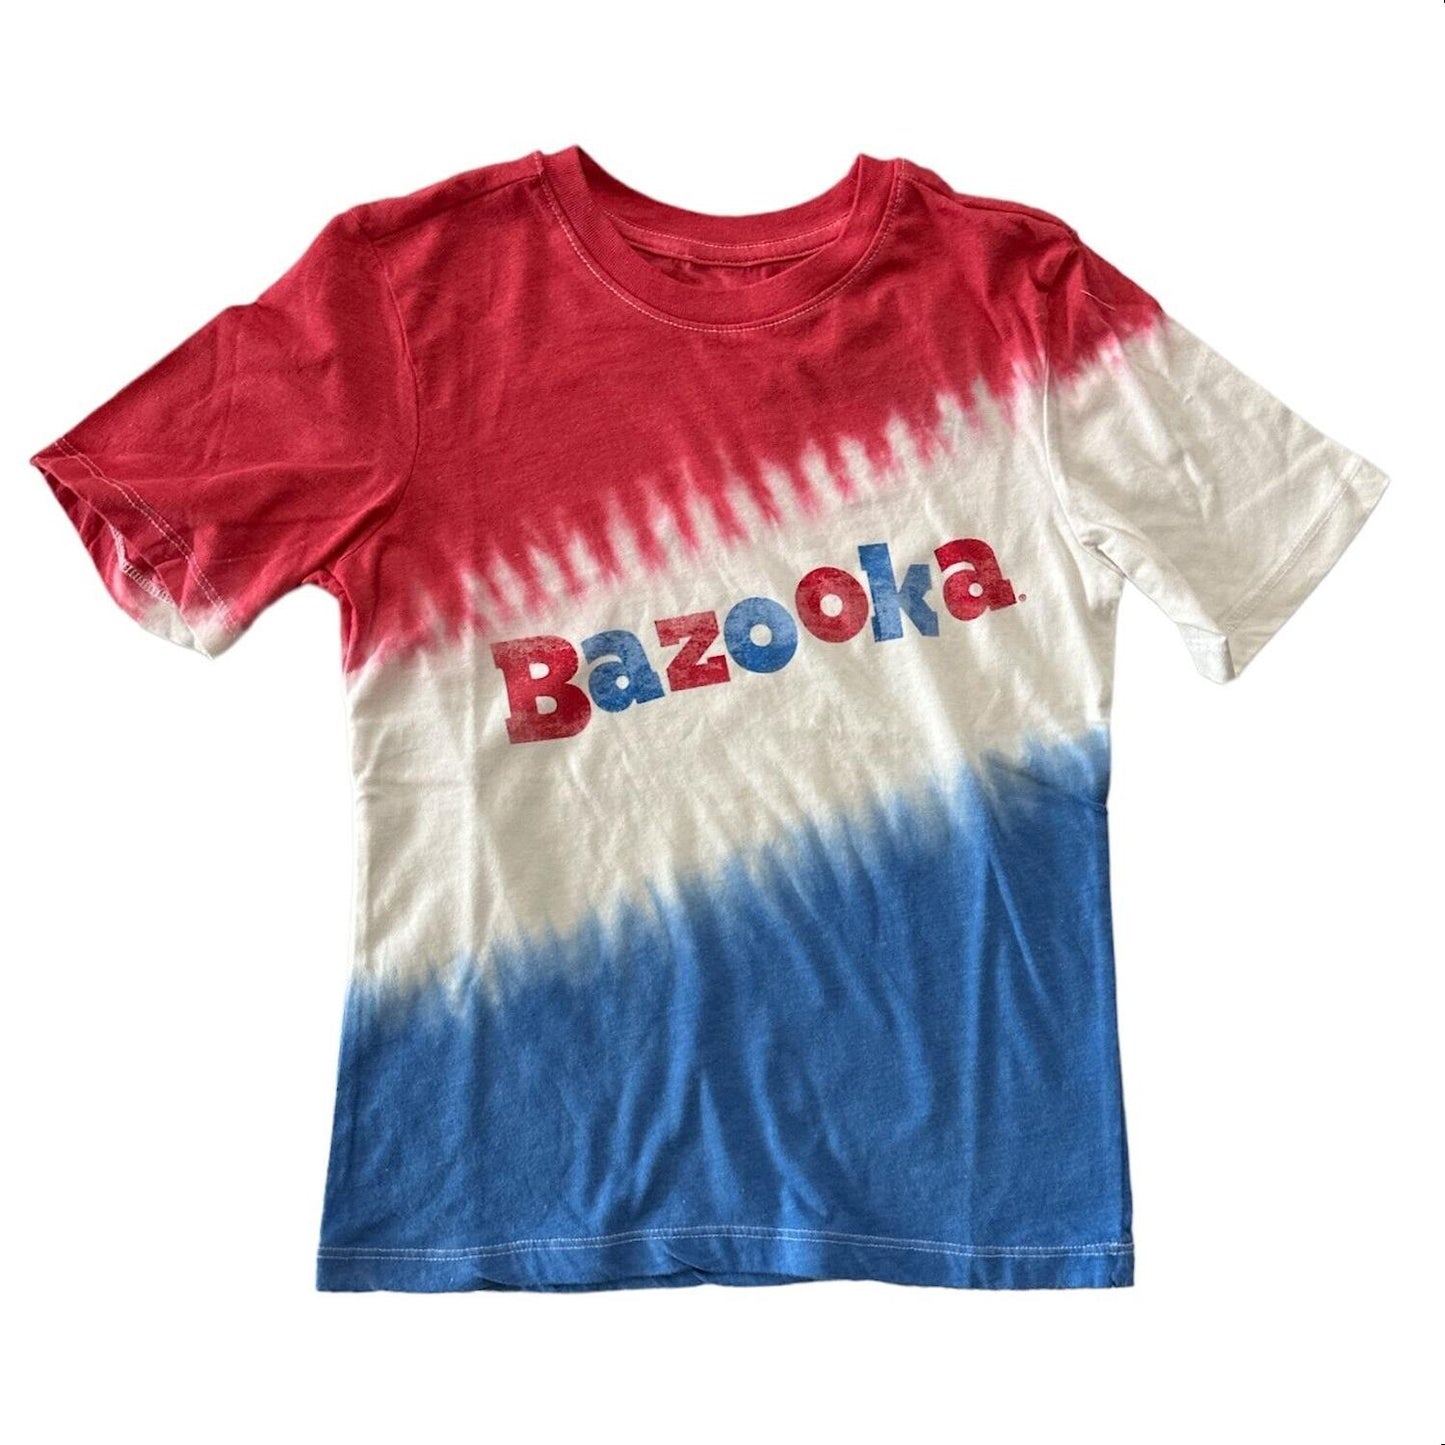 Boy's Licensed Retro Vintage Graphic Tee Short Sleeve T-Shirt Bazooka Tootsie Roll